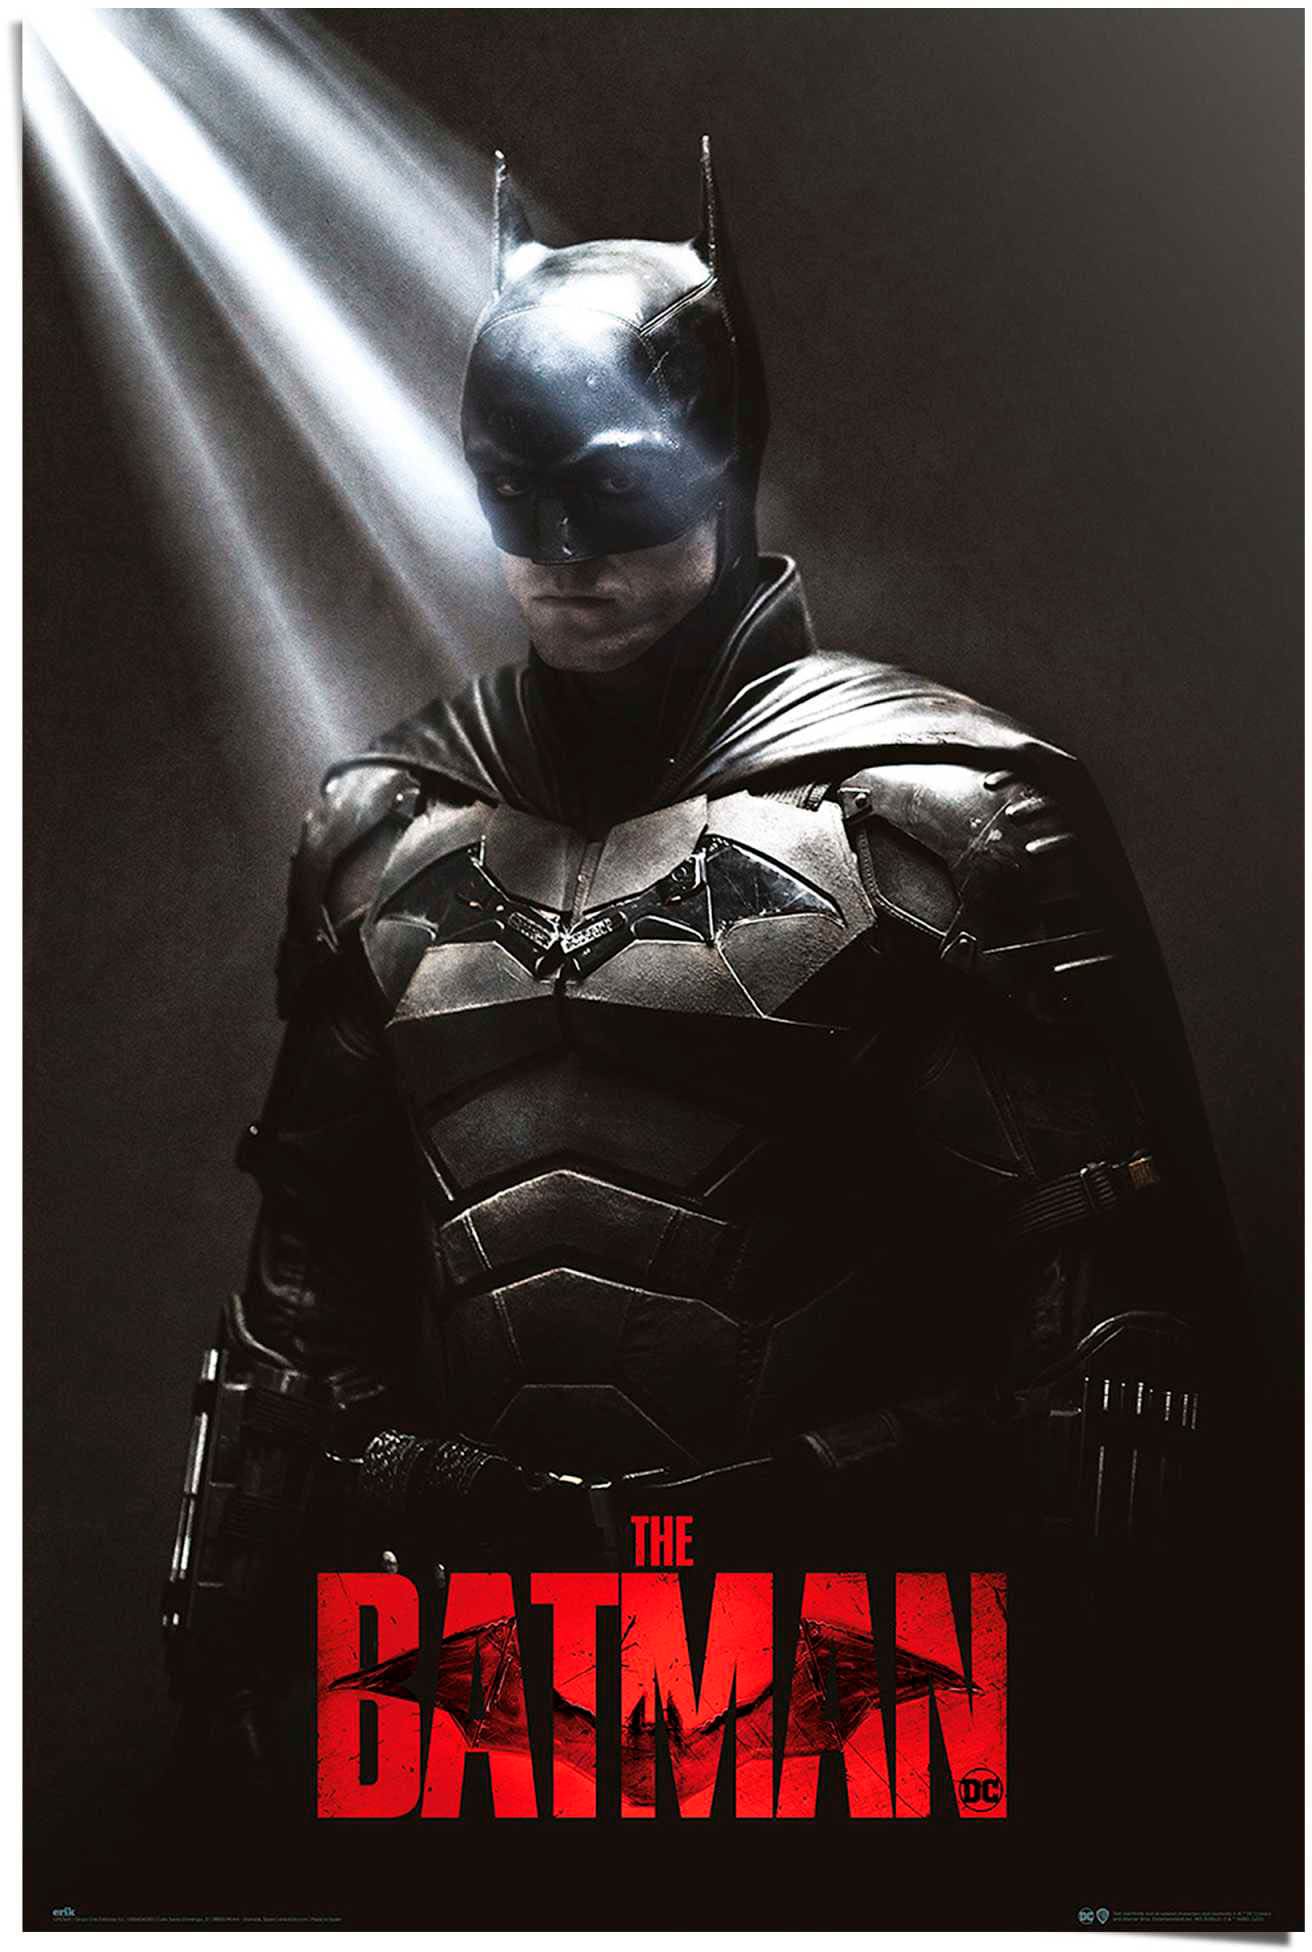 Reinders! Poster »DC kaufen I Raten auf The am - shadows« the Batman